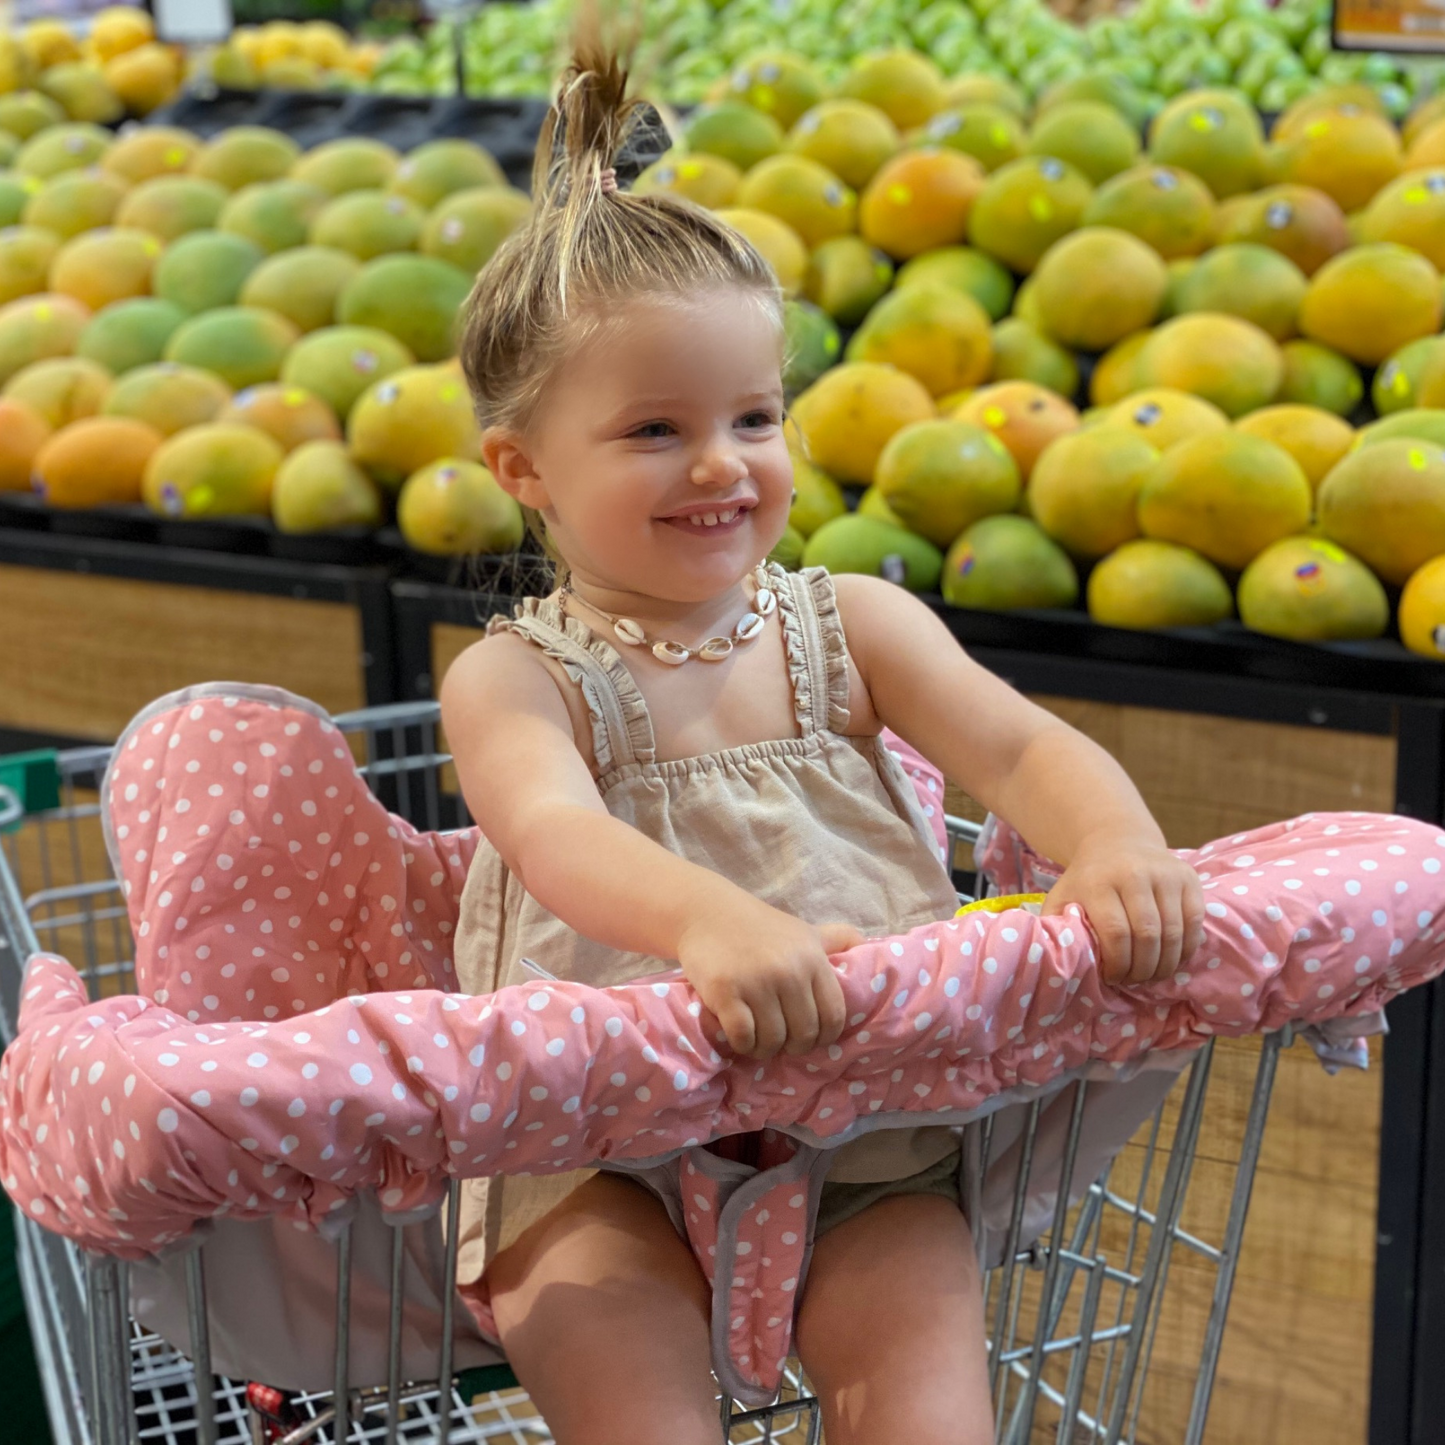 Shopping Cart & Highchair Cover - Pink Dots